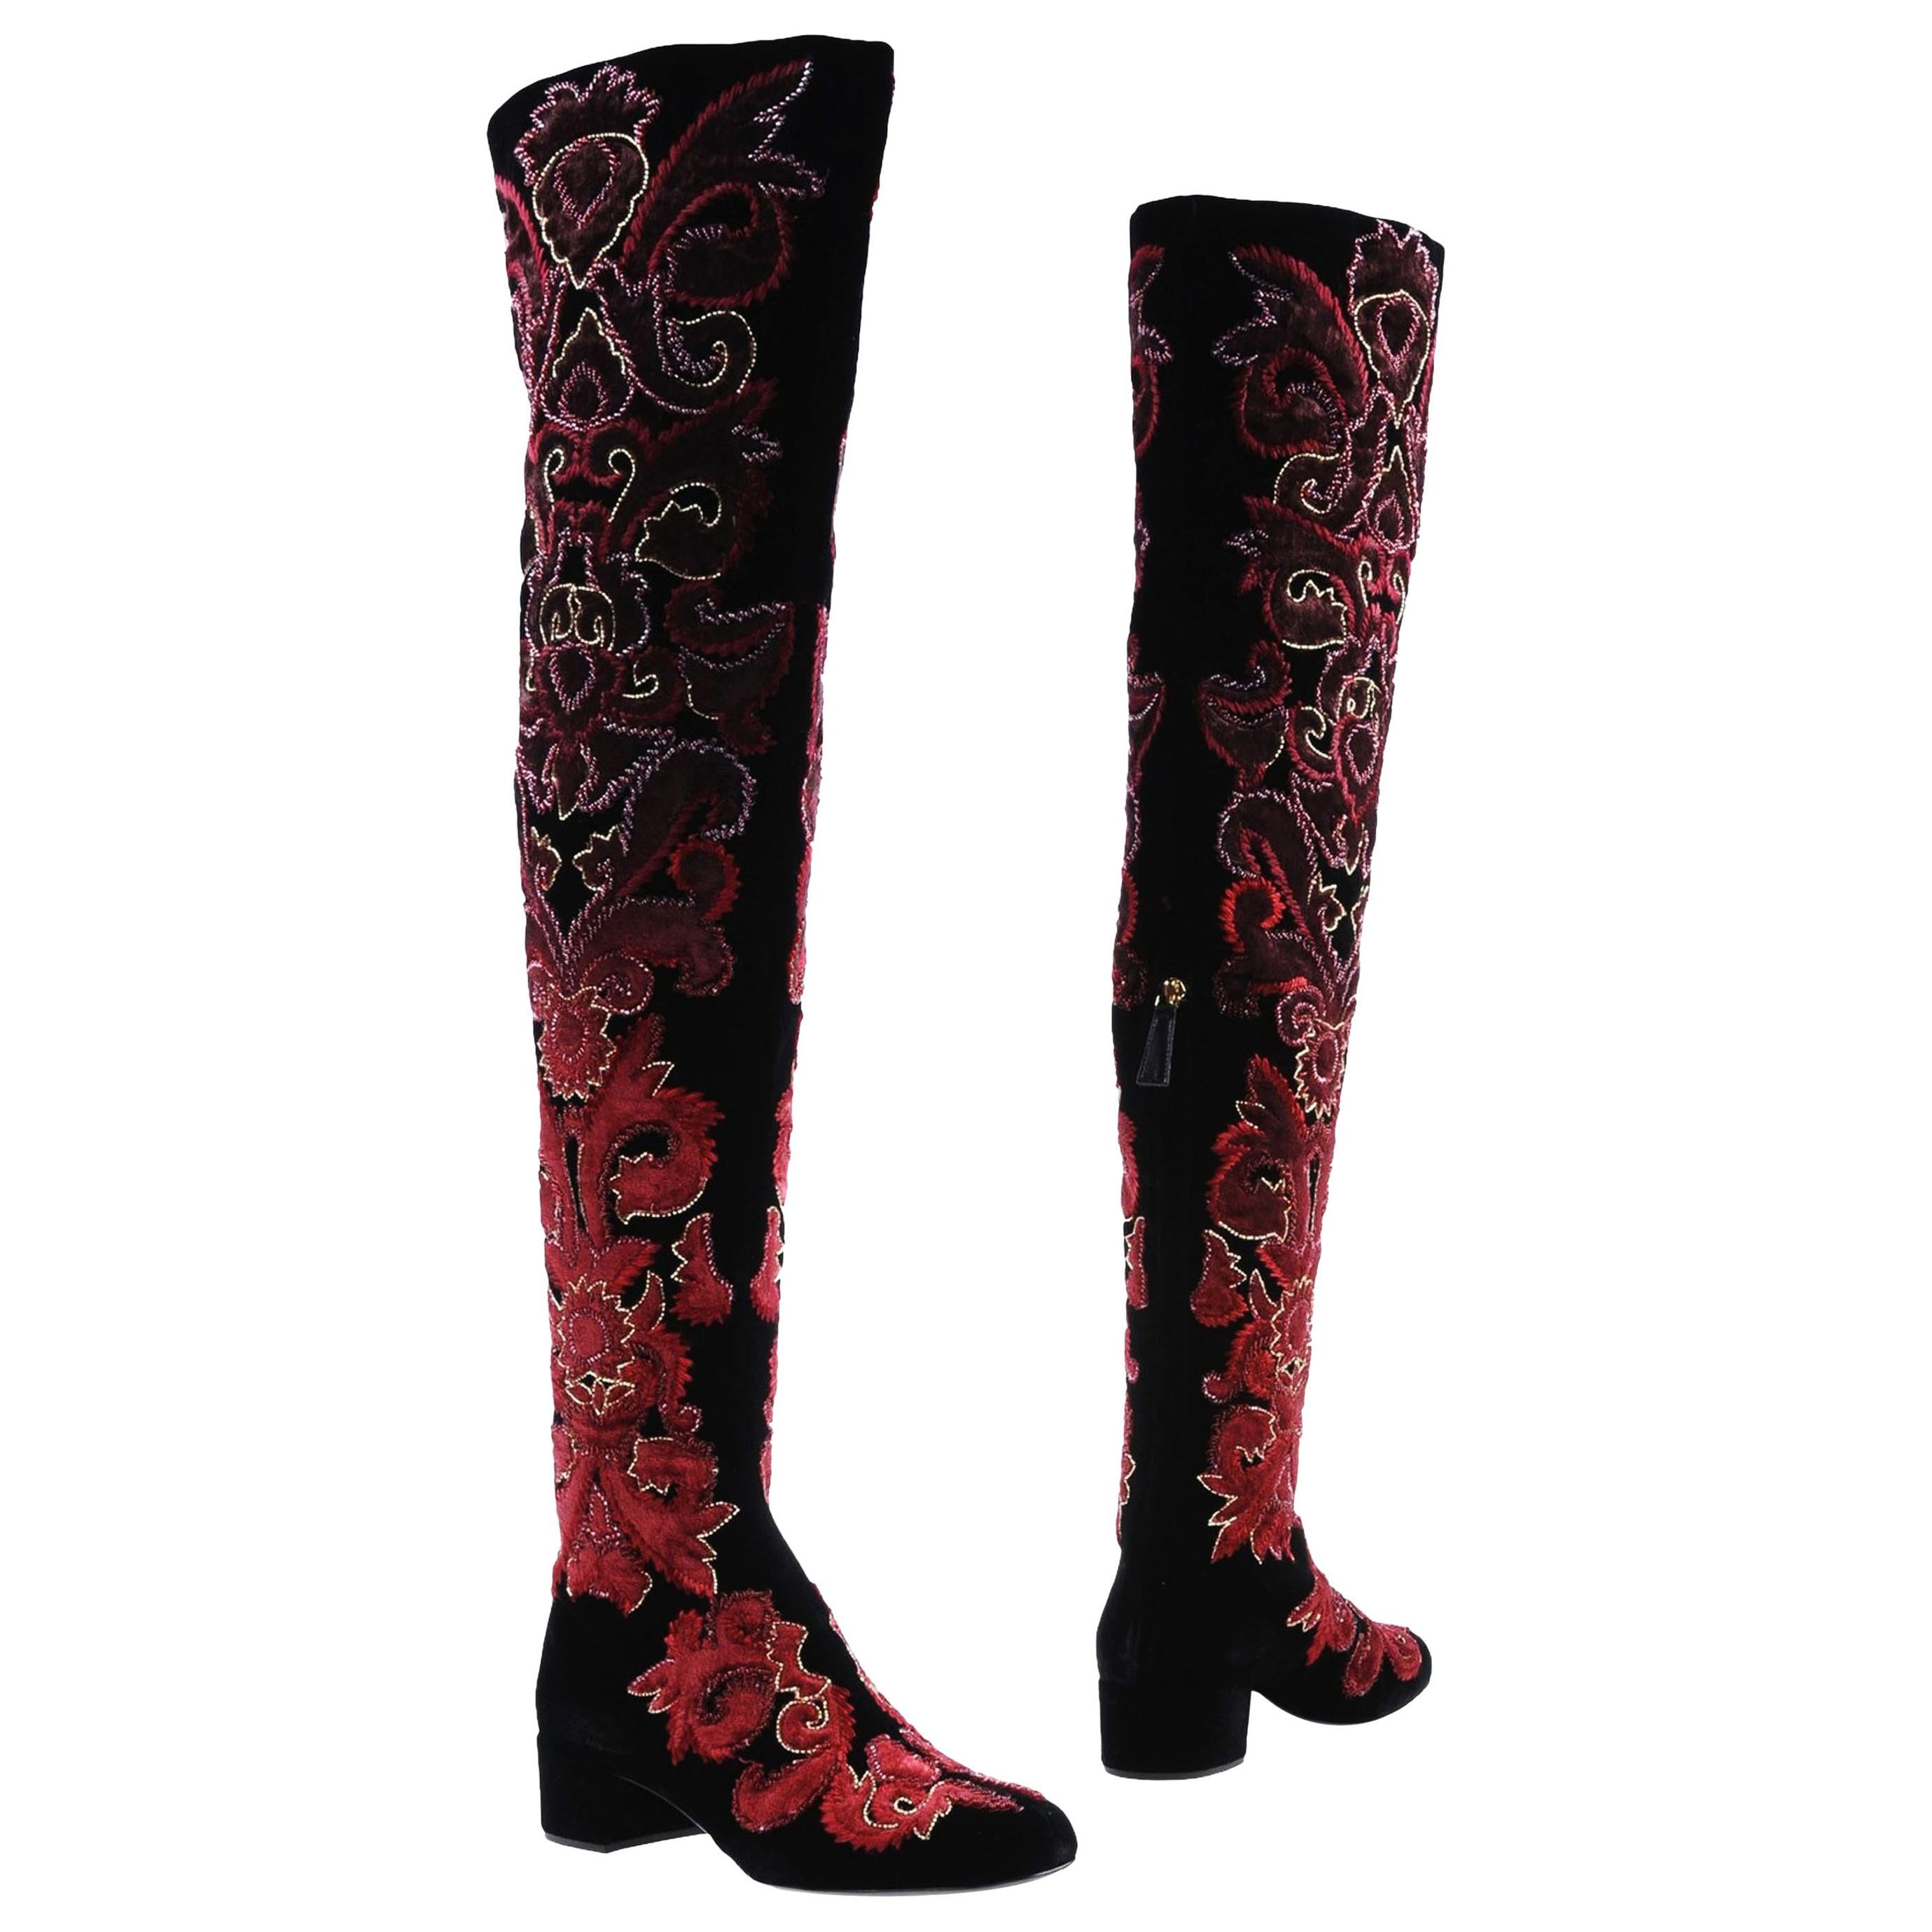 New Alberta Ferretti Velvet Beaded Embroidered Thigh High Boots 39 - 9